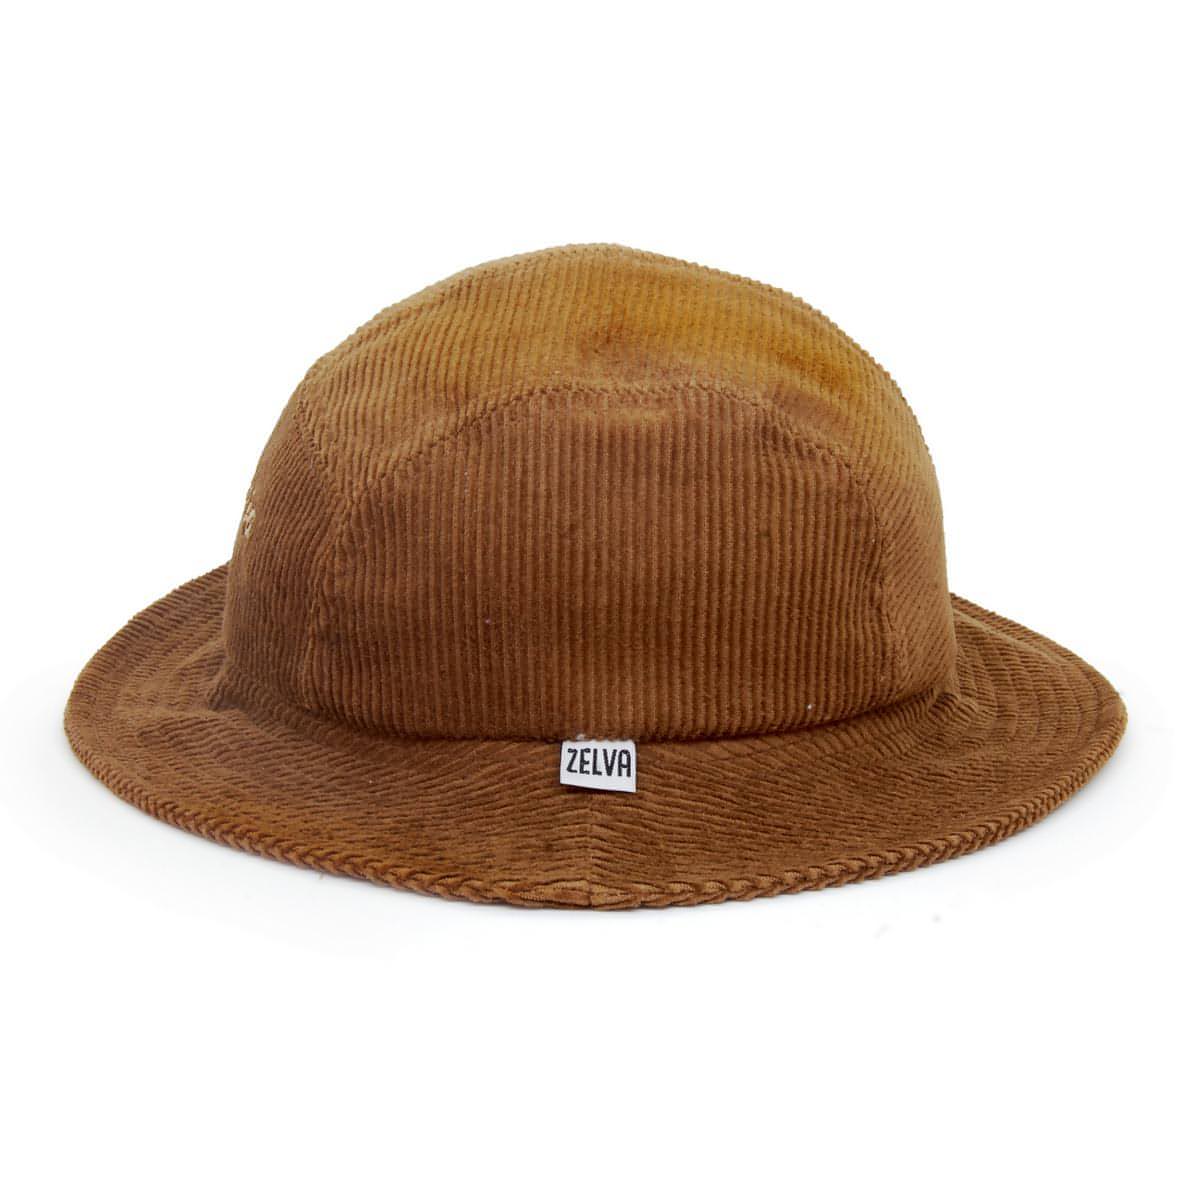 Rust Hat